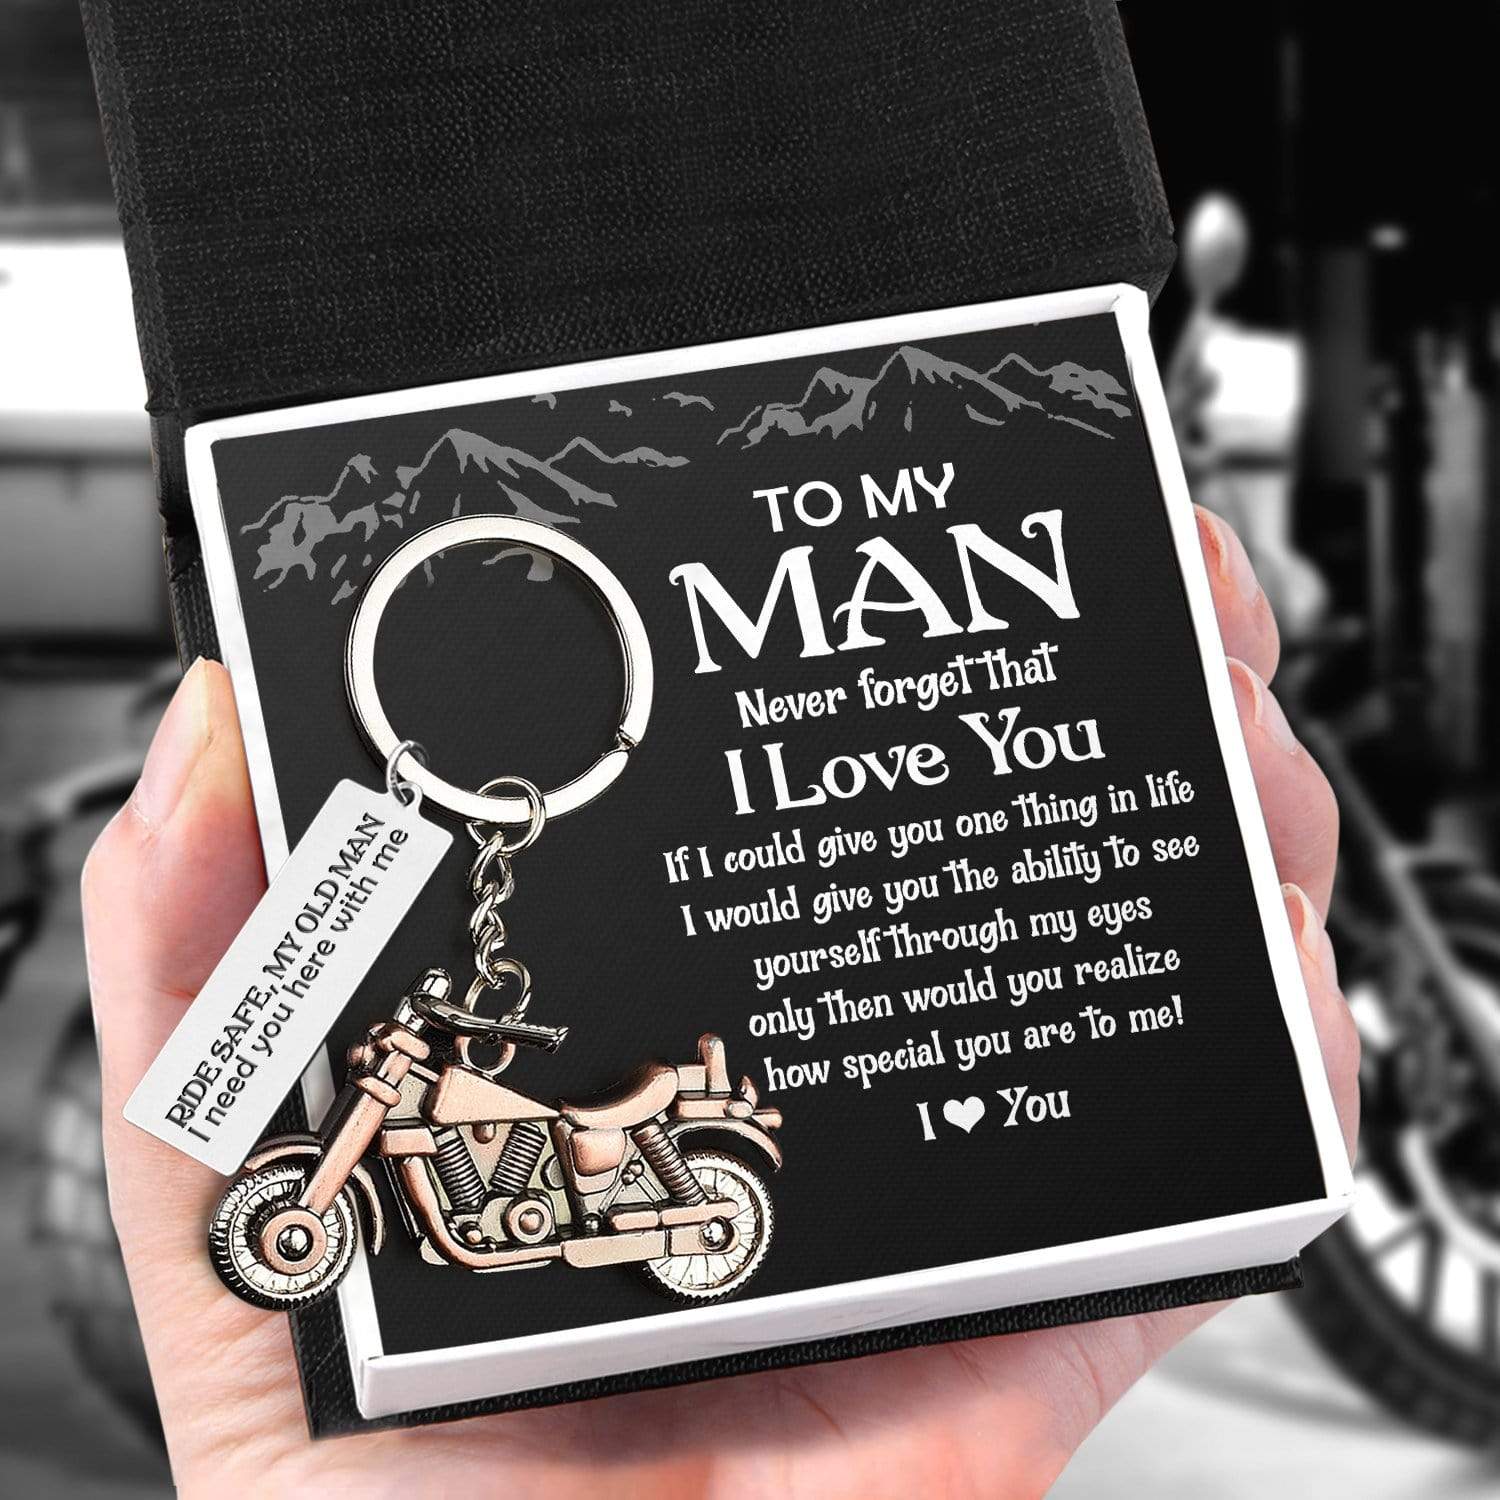 Old-School motorcycle Keychain - Biker - To My Man - I Love You - Gkej26001